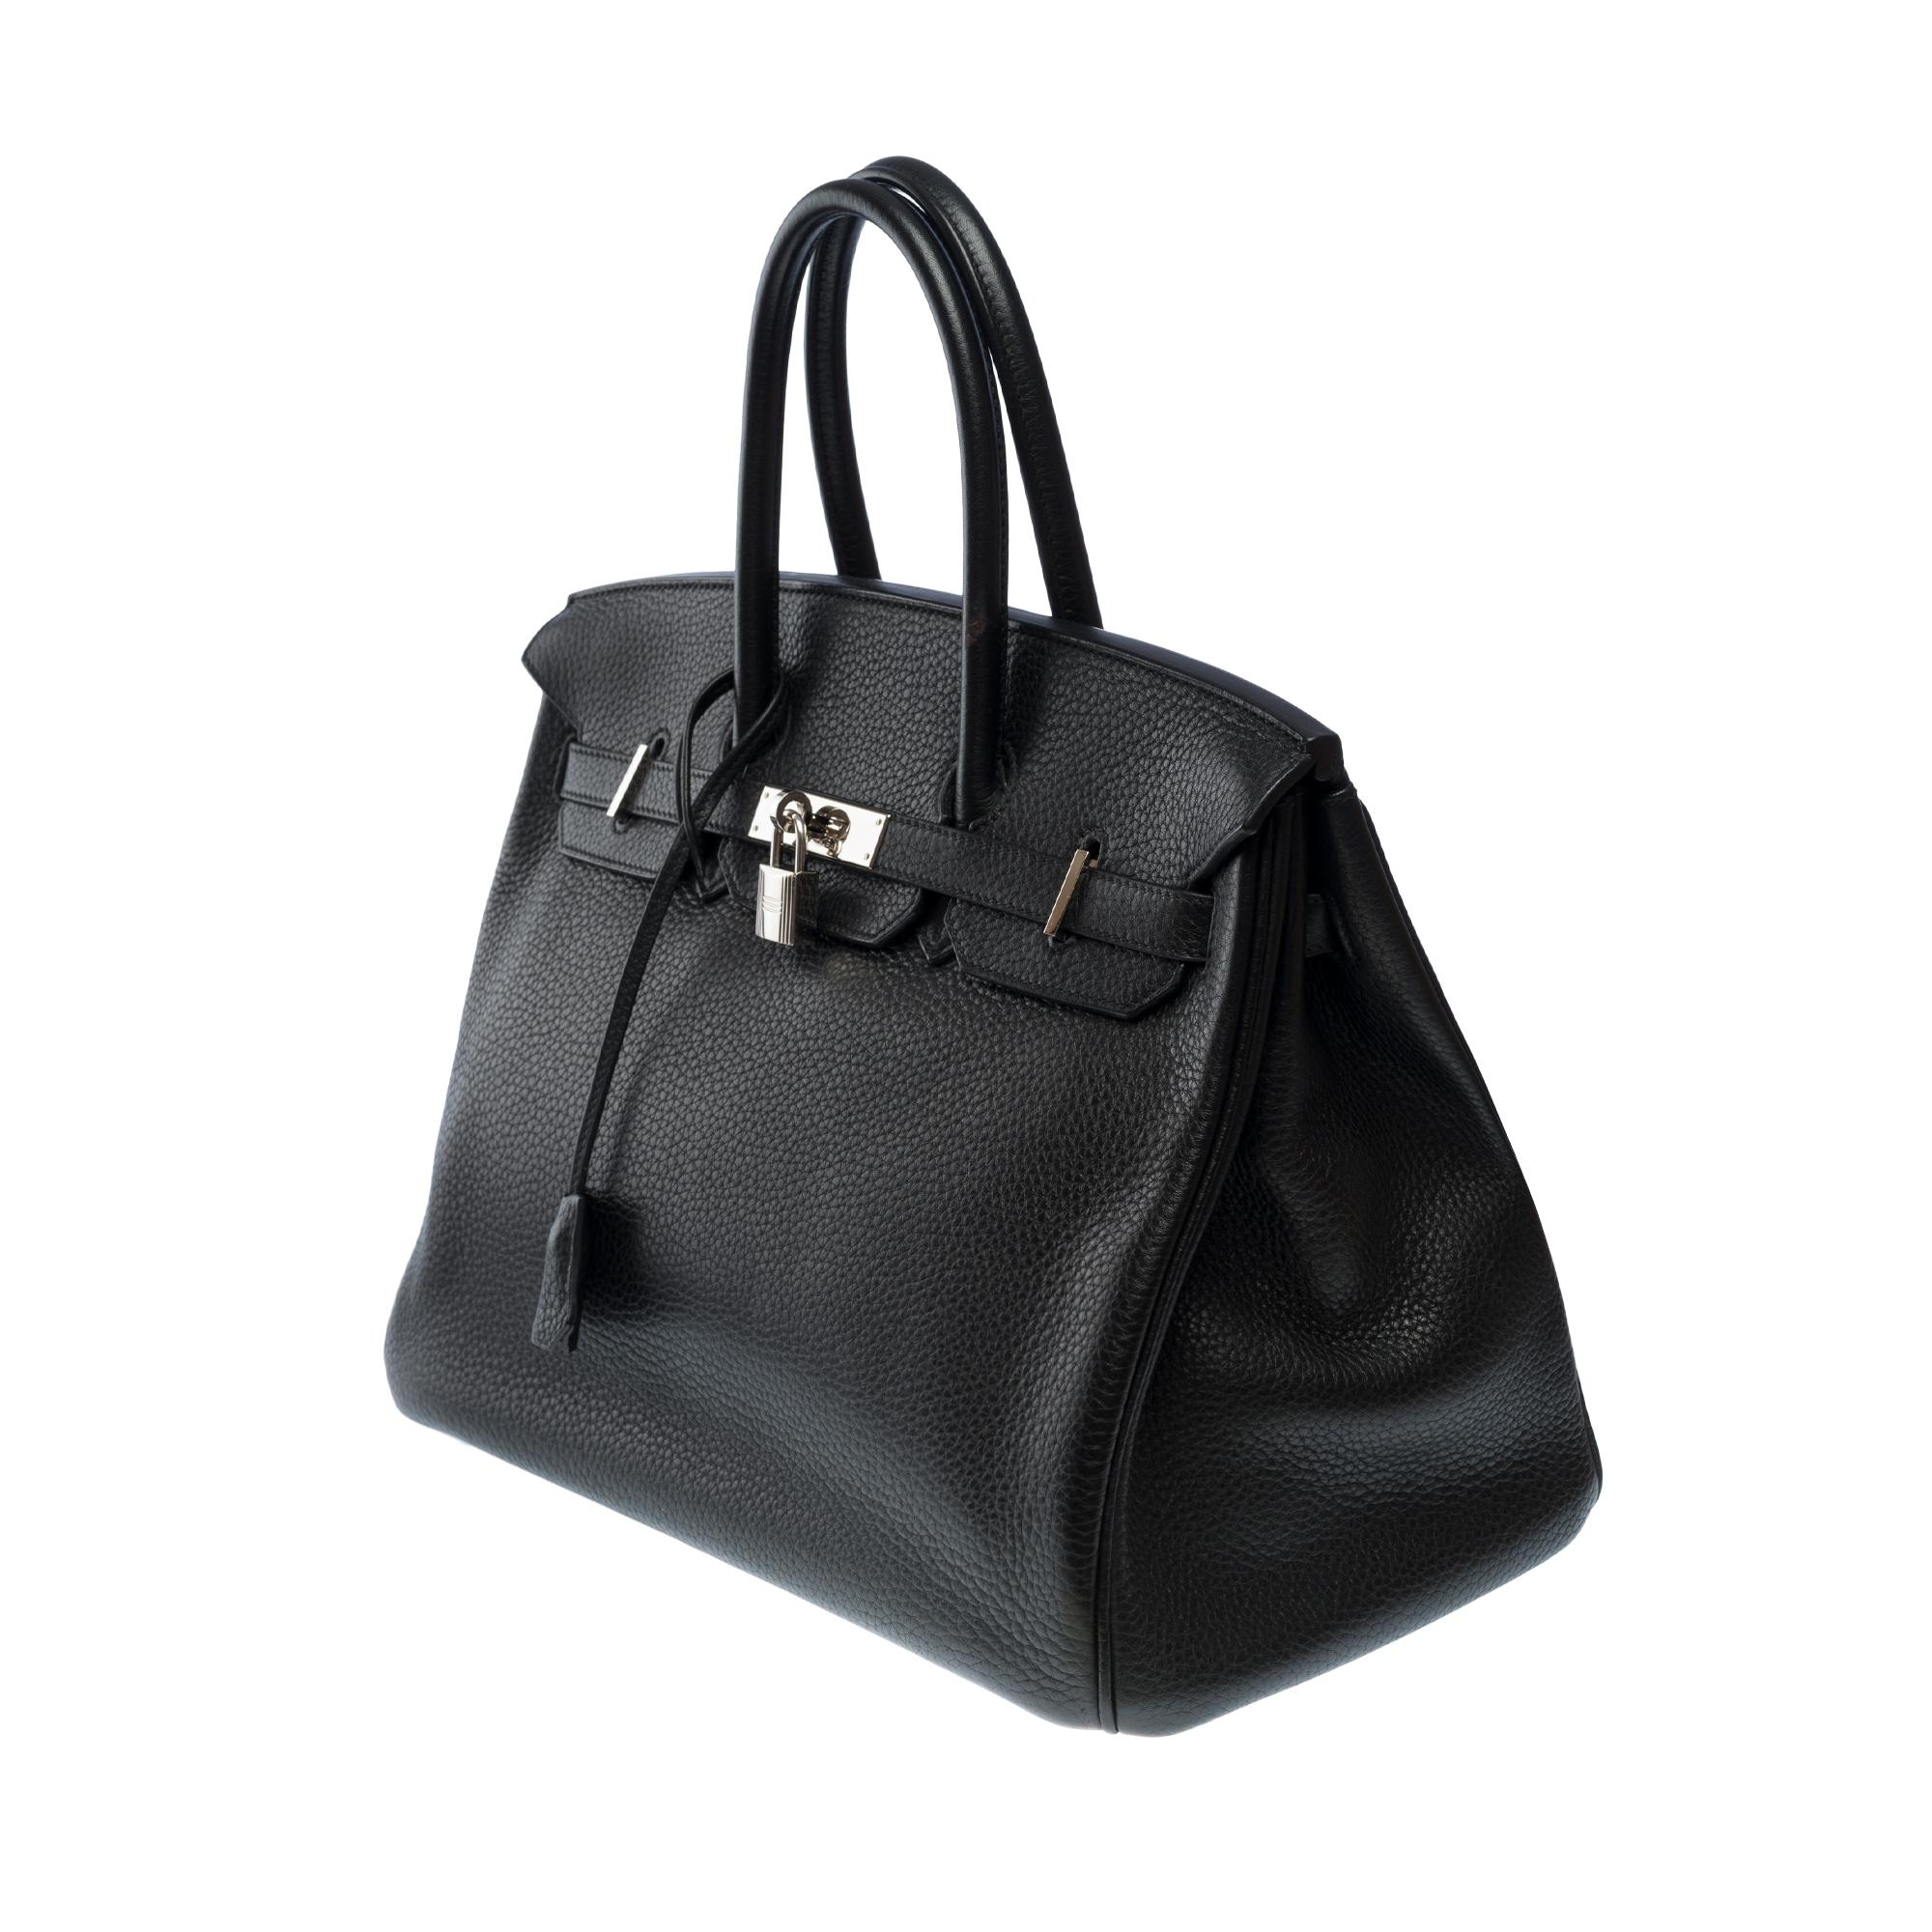 Women's or Men's Amazing Hermès Birkin 35 handbag in black Togo leather, SHW